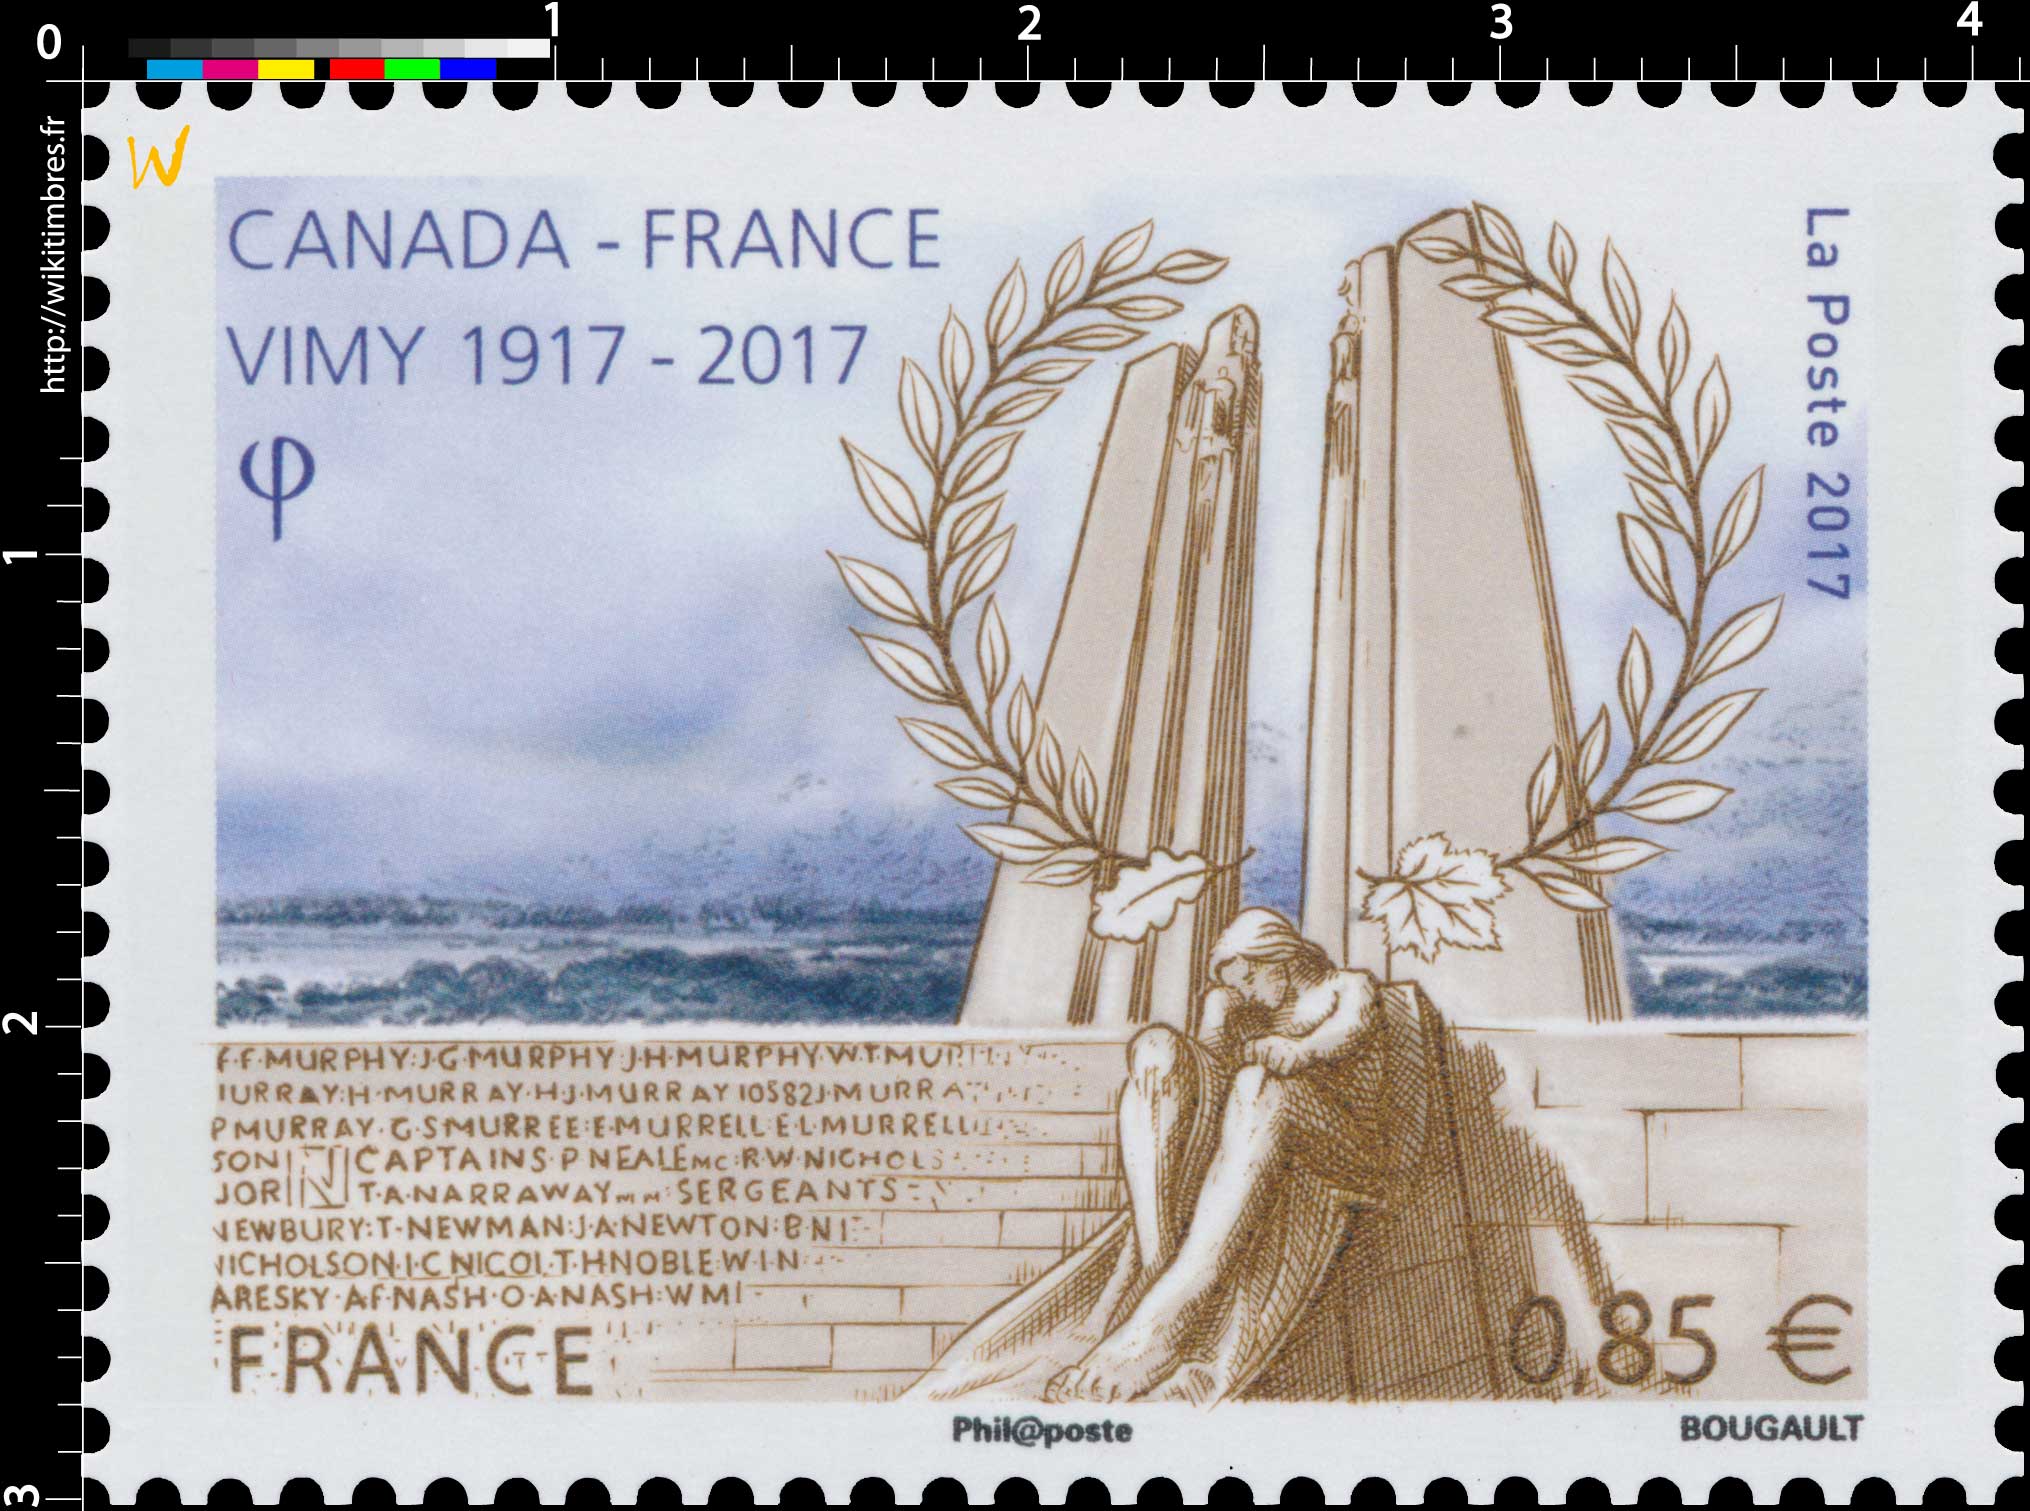 2017  Canada - France  Vimy 1917 - 2017 